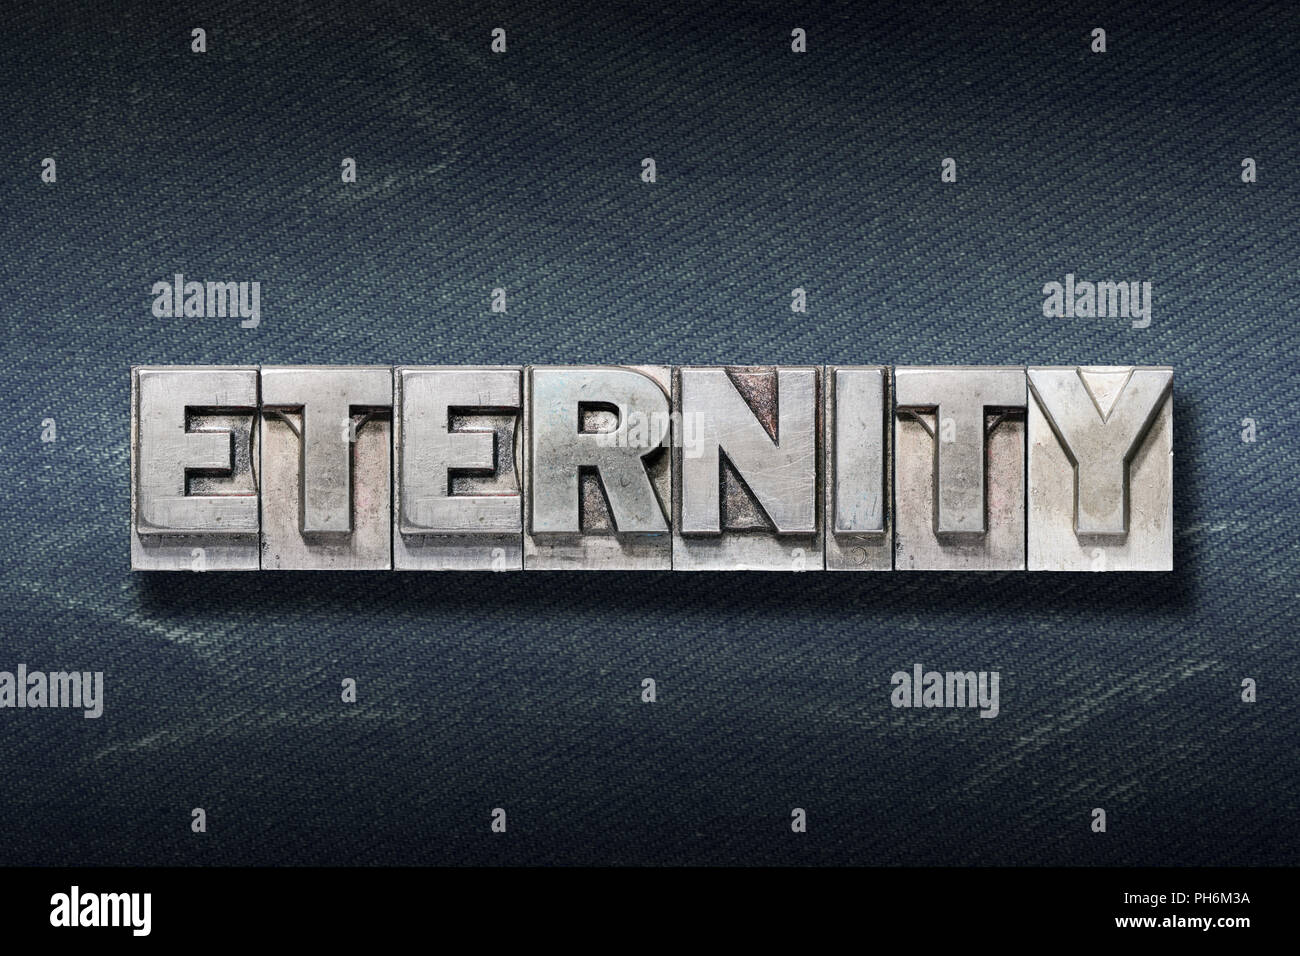 eternity word made from metallic letterpress on dark jeans background Stock Photo